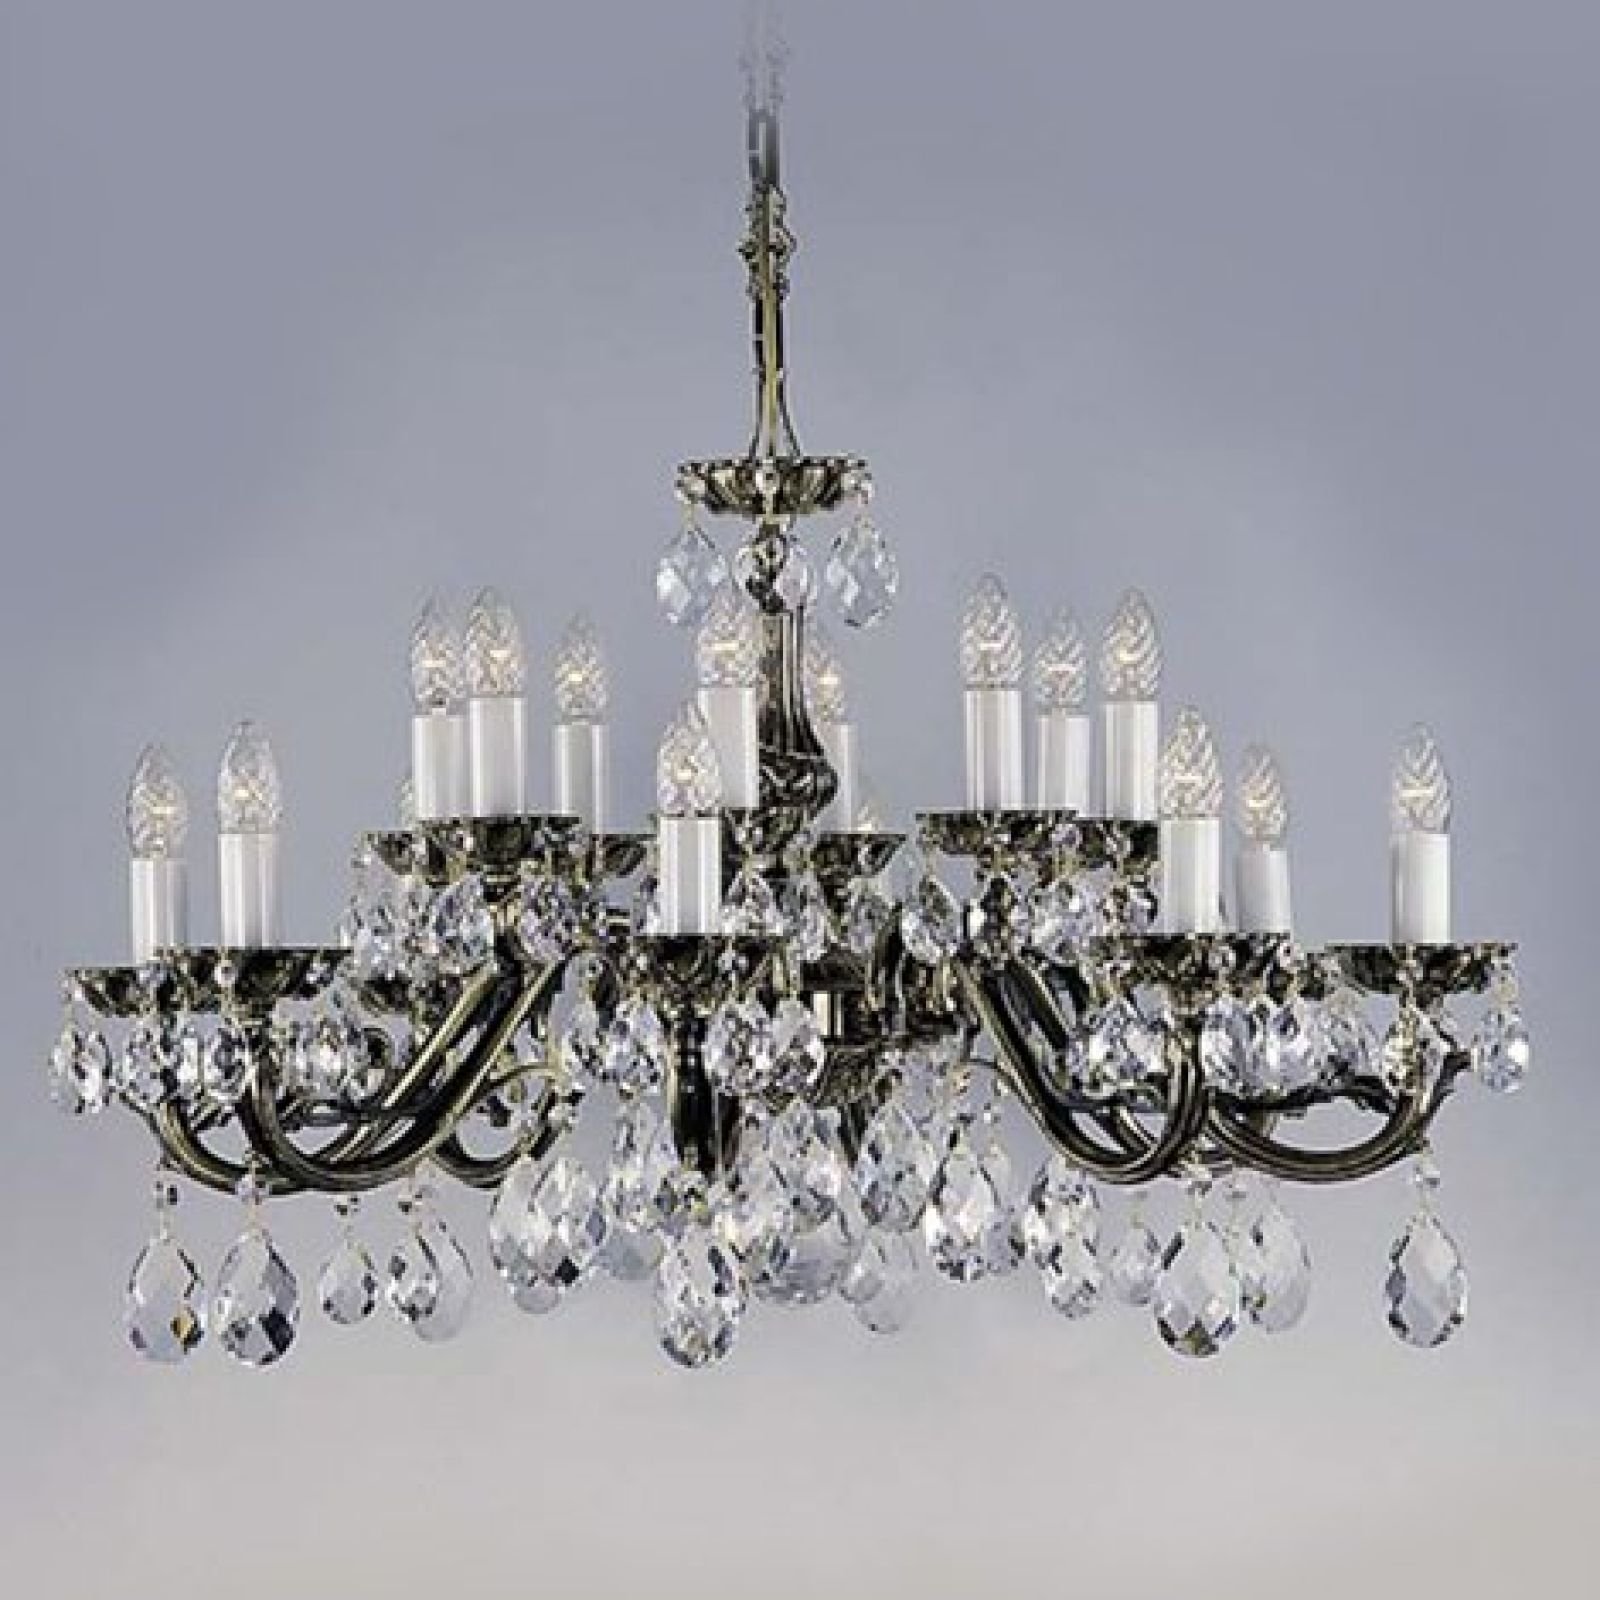 Stunning cast metal chandelier